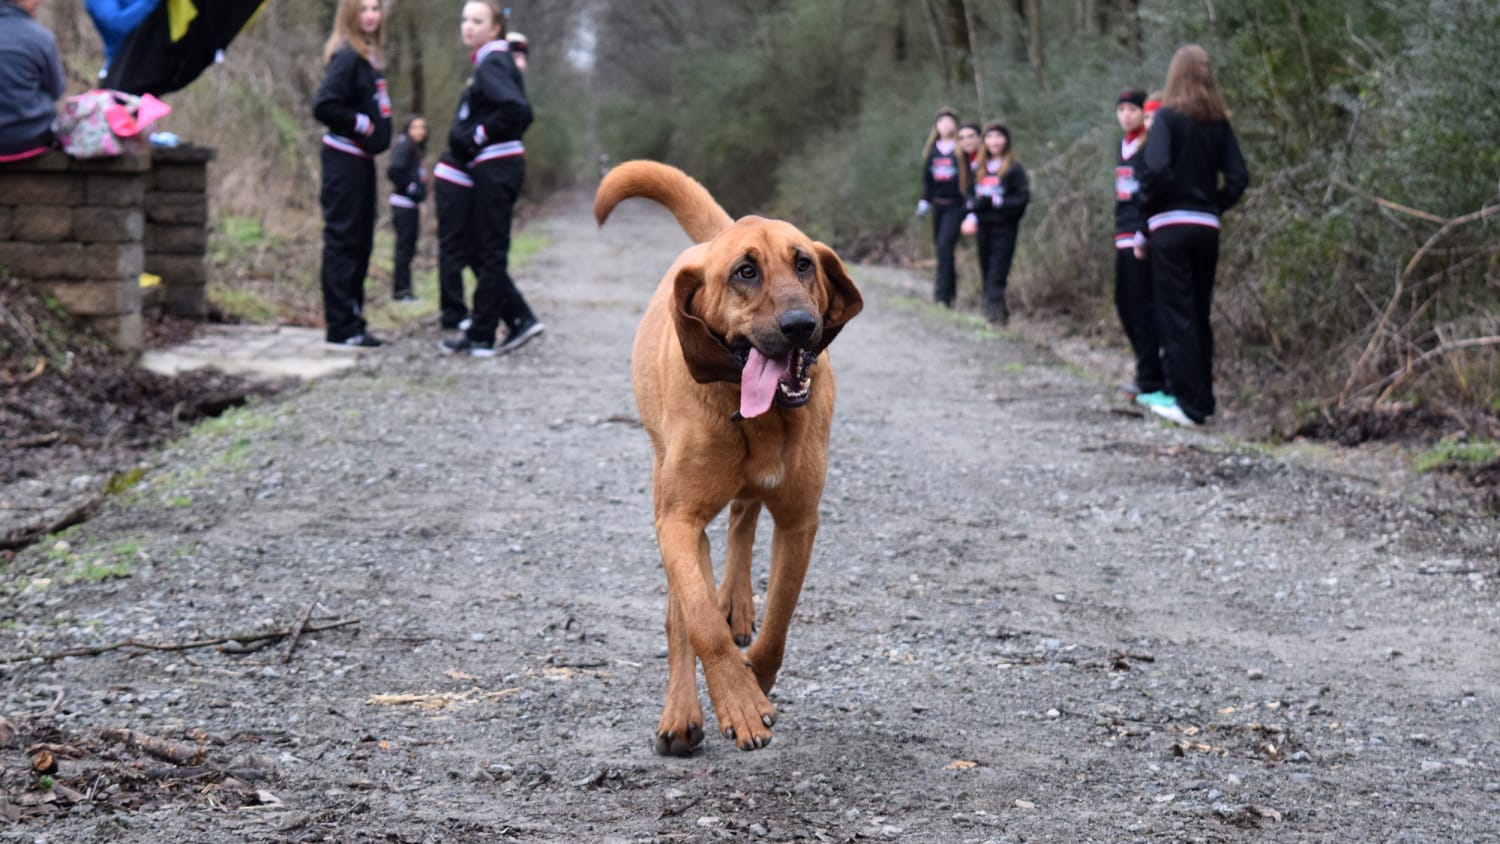 This adorable dog wandered into an Alabama half-marathon, finished 7th